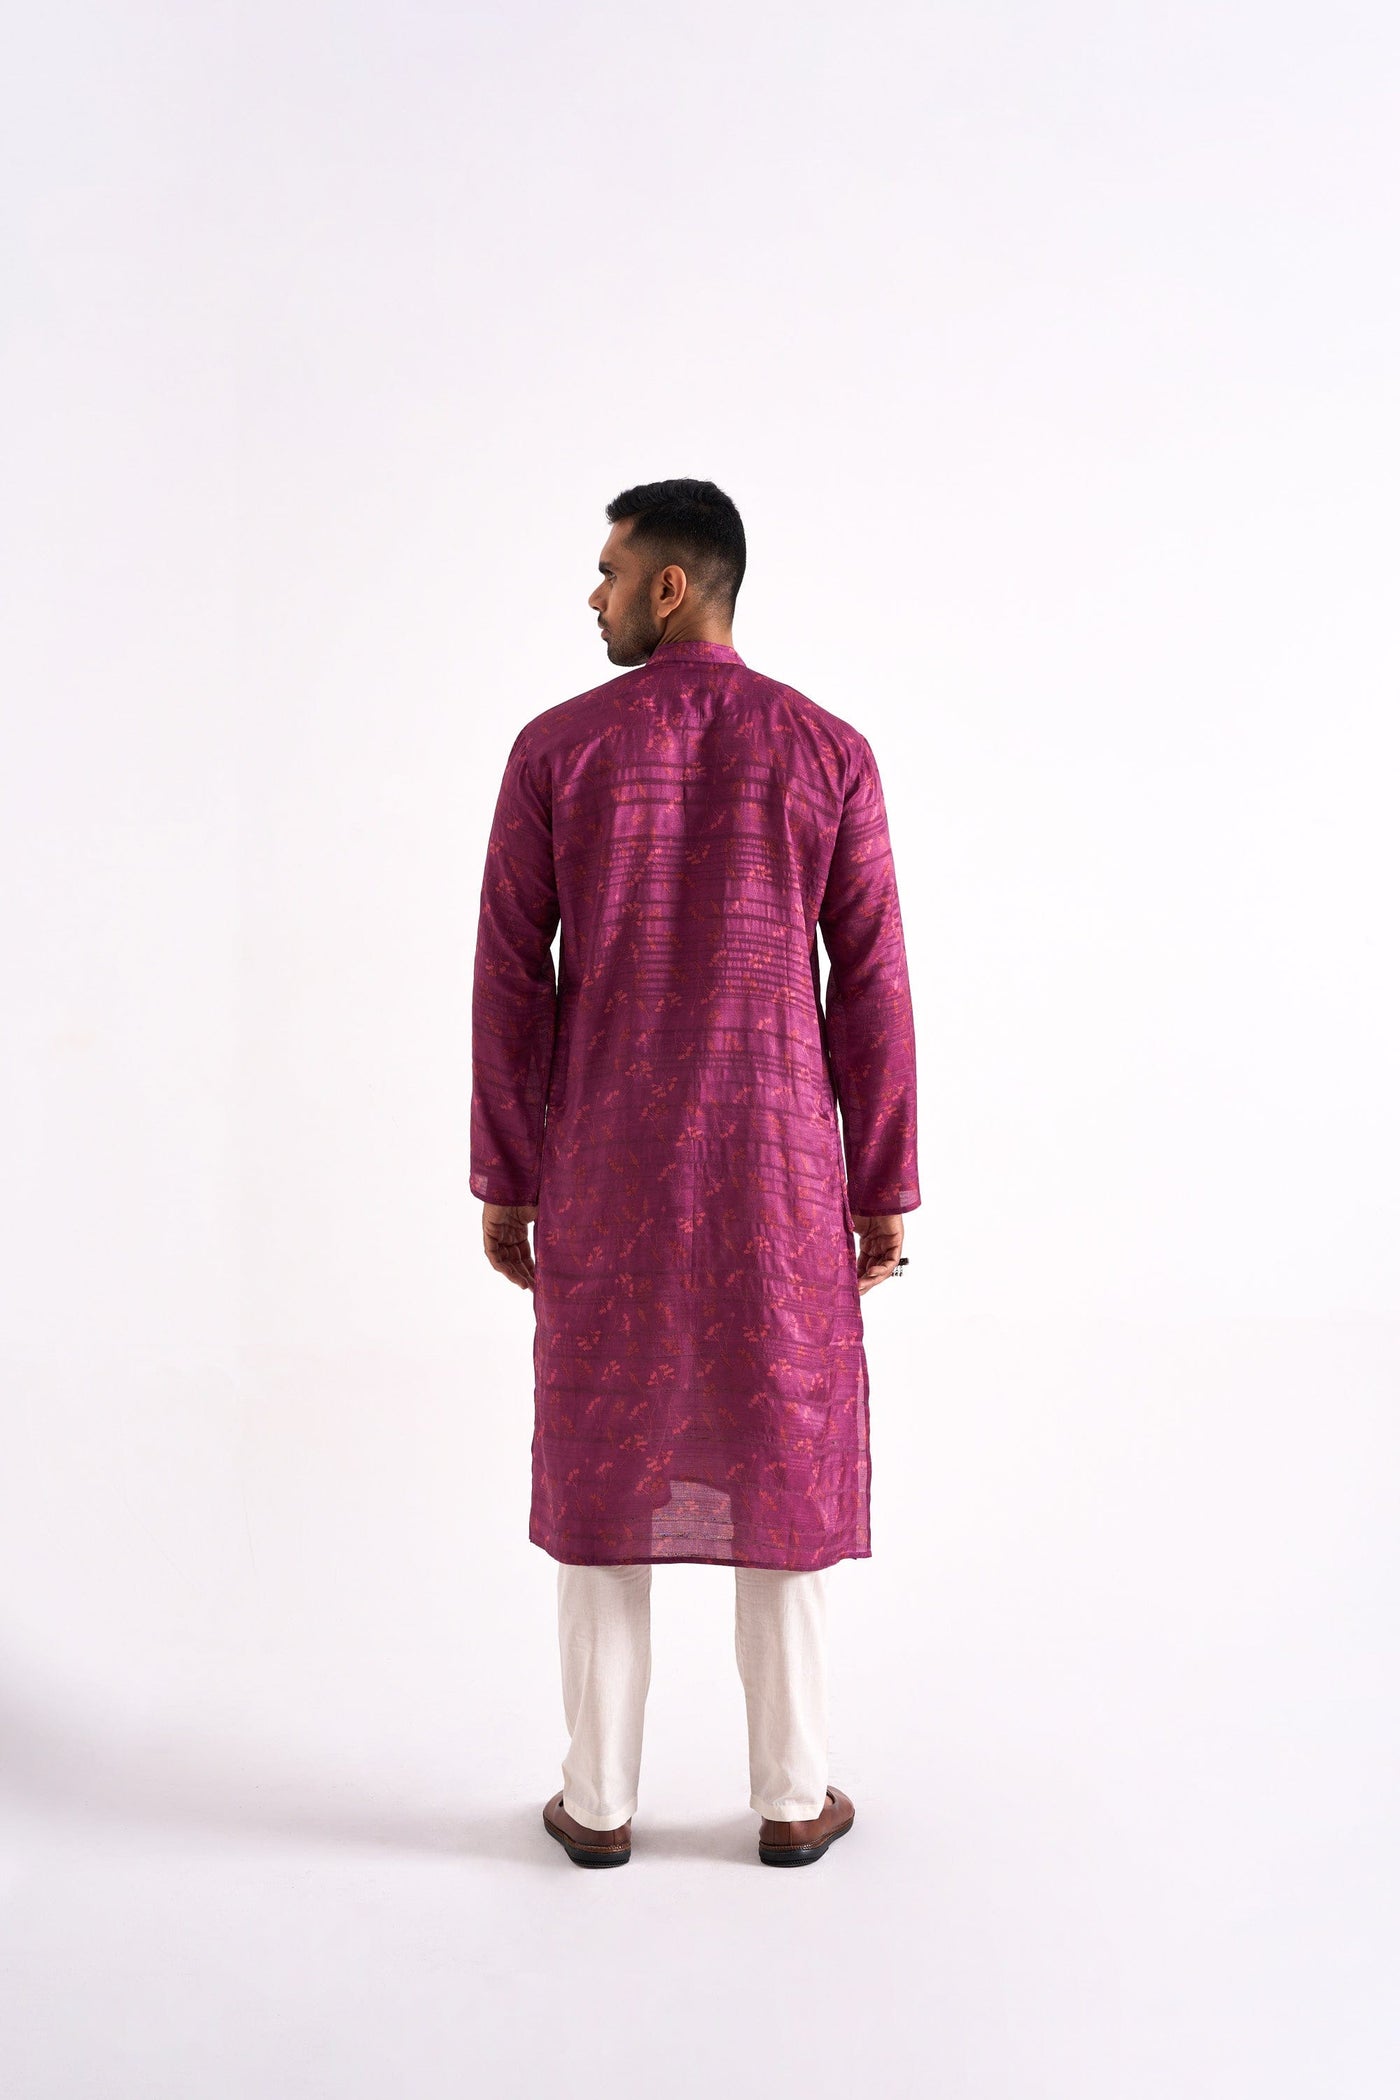 Fabric Pandit Men's Stitched Long Kurta Men's Soft Magenta Printed Tussar Silk Comfort Fit Long Kurta